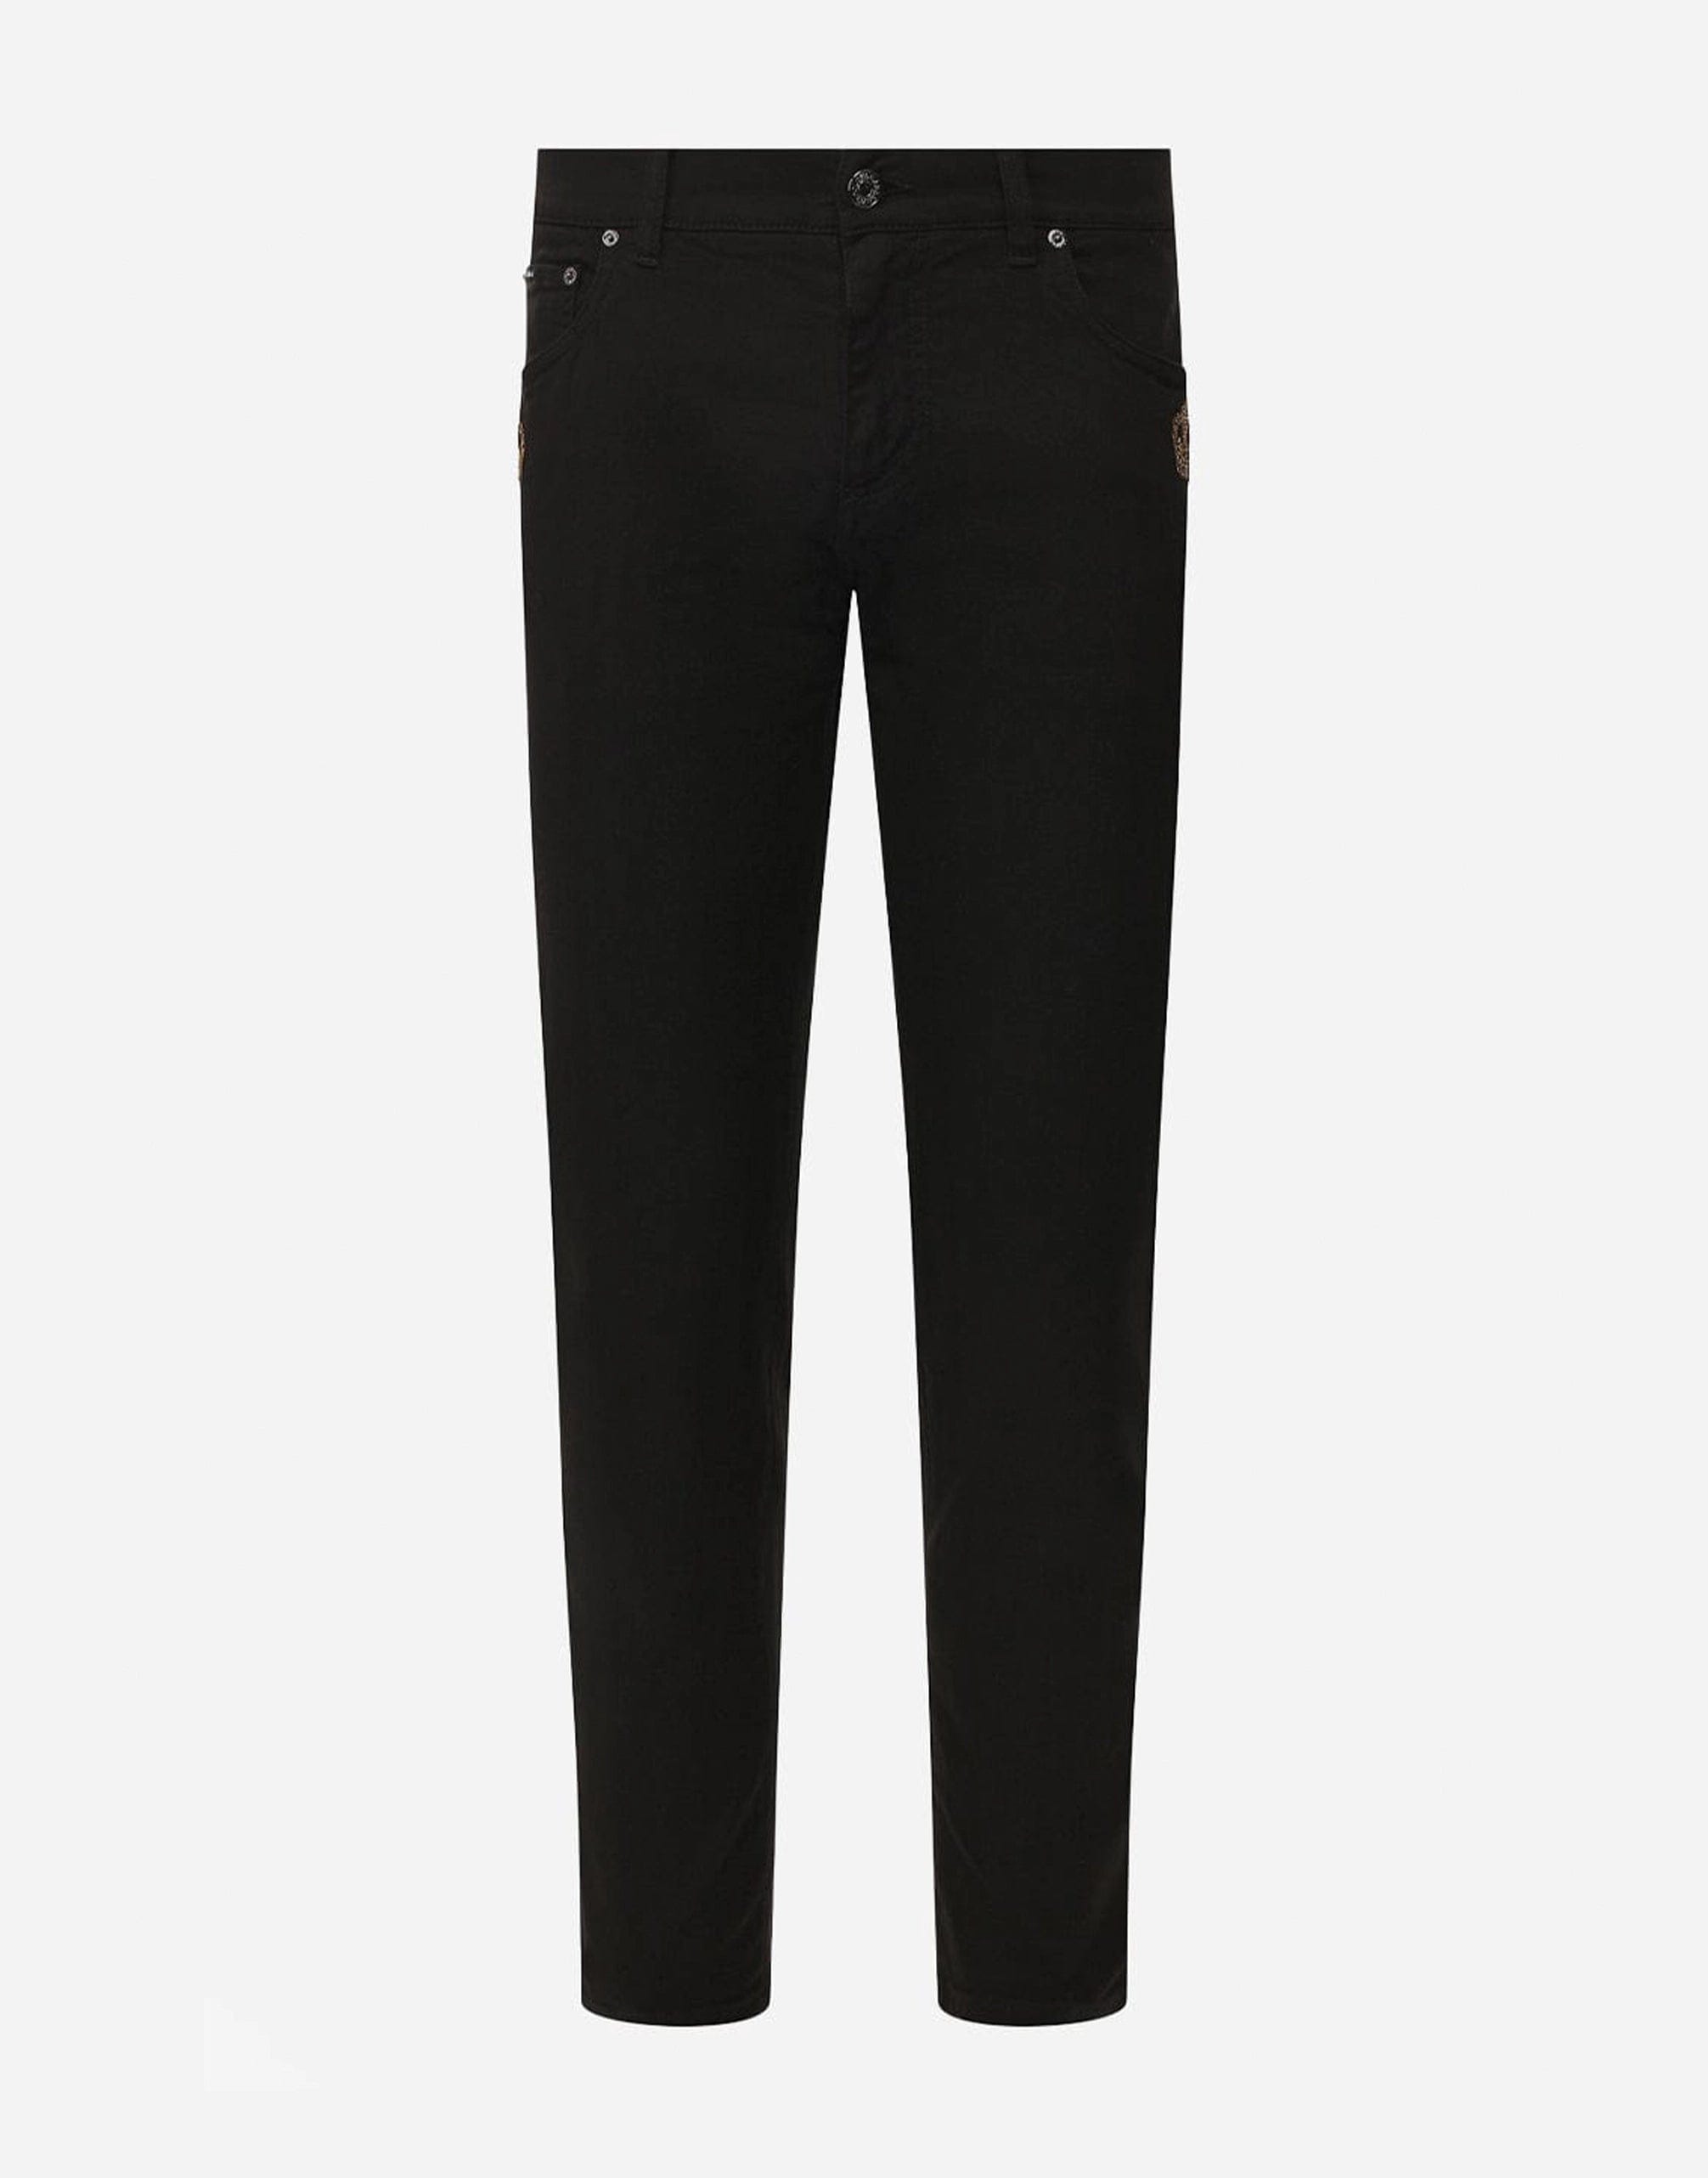 Dolce & Gabbana Contrast Stripe Straight-Leg Jeans